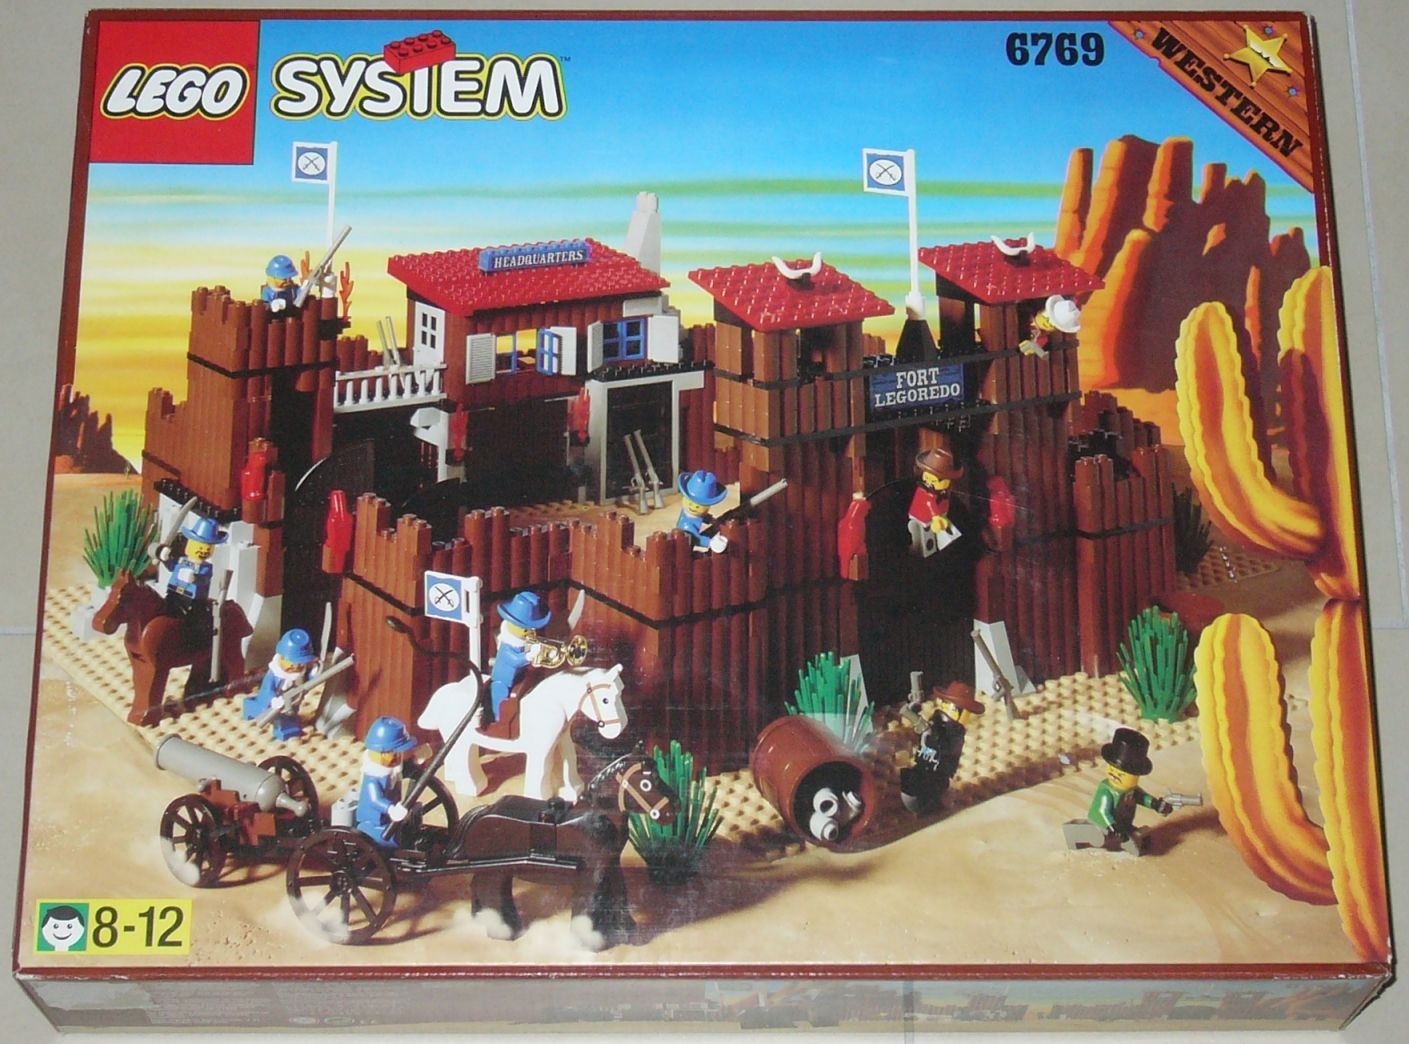 90s lego sets